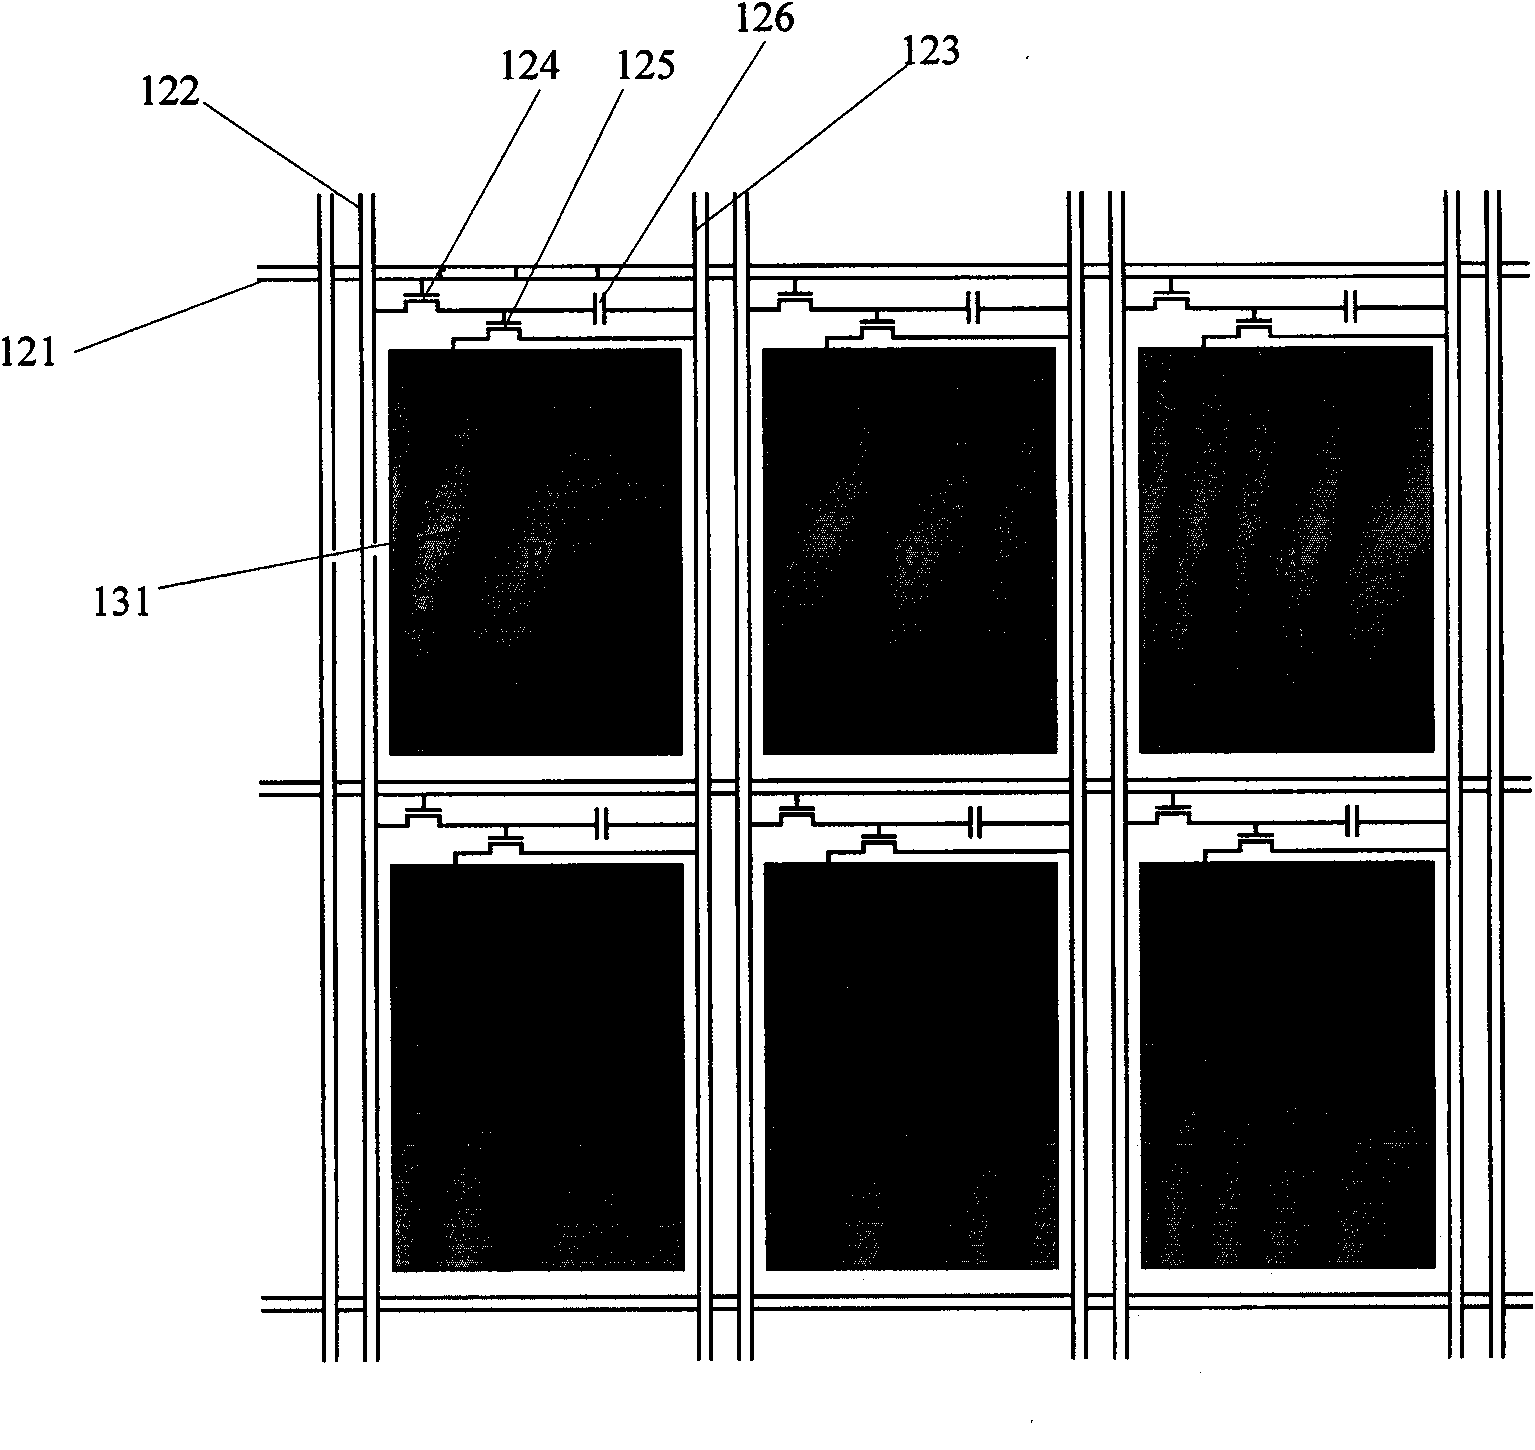 Organic light-emitting diode (OLED) display screen